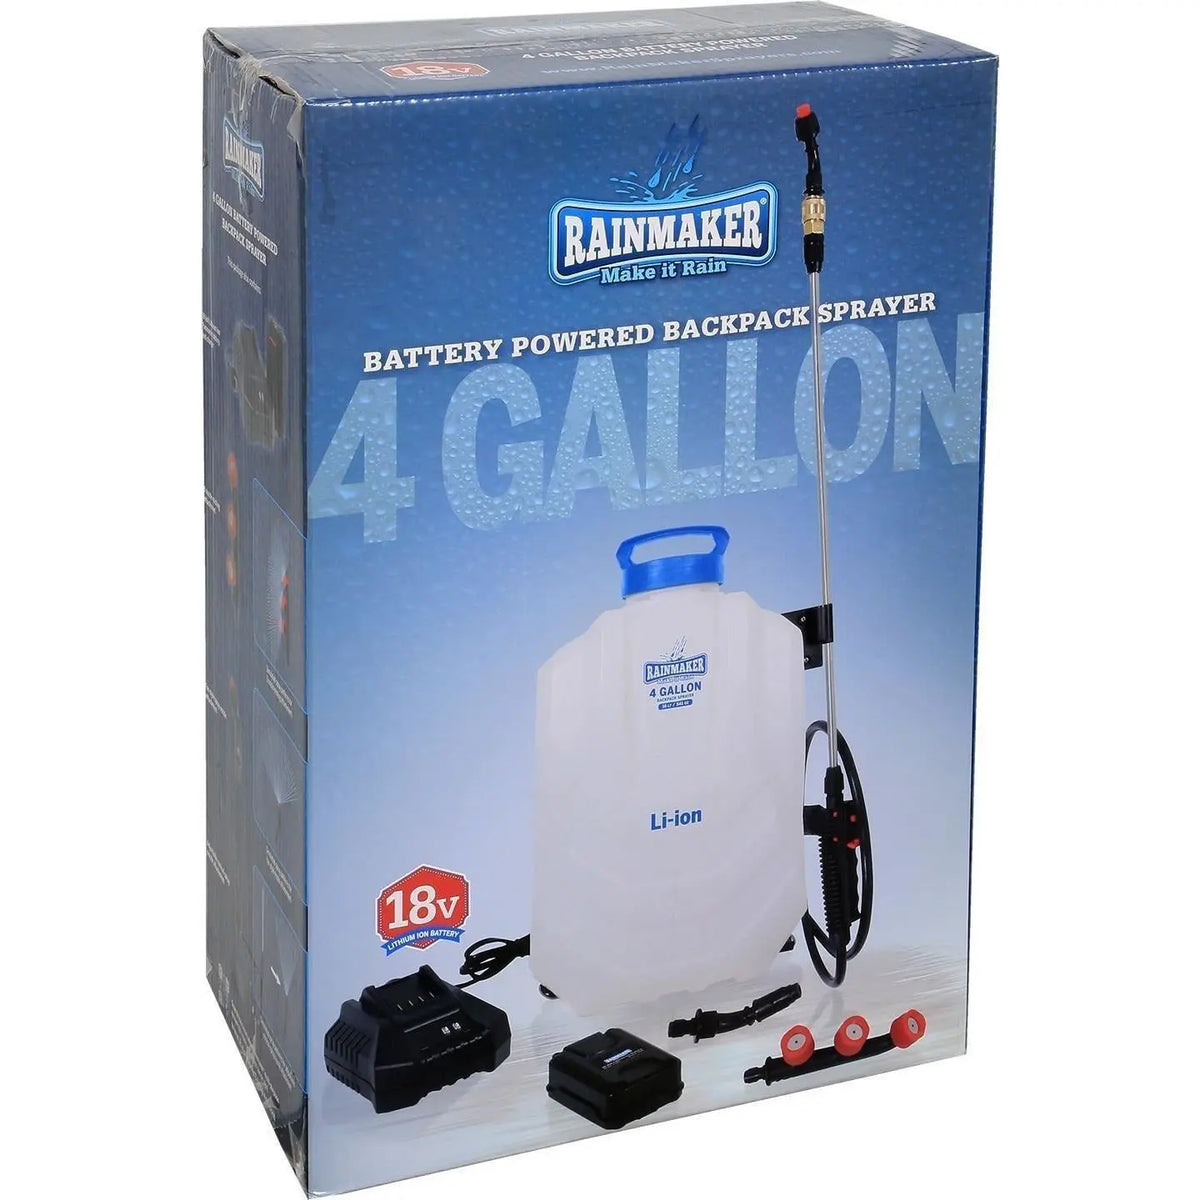 Rainmaker® 18 Volt Lithium Ion Backpack Sprayer, 4 gal Rainmaker